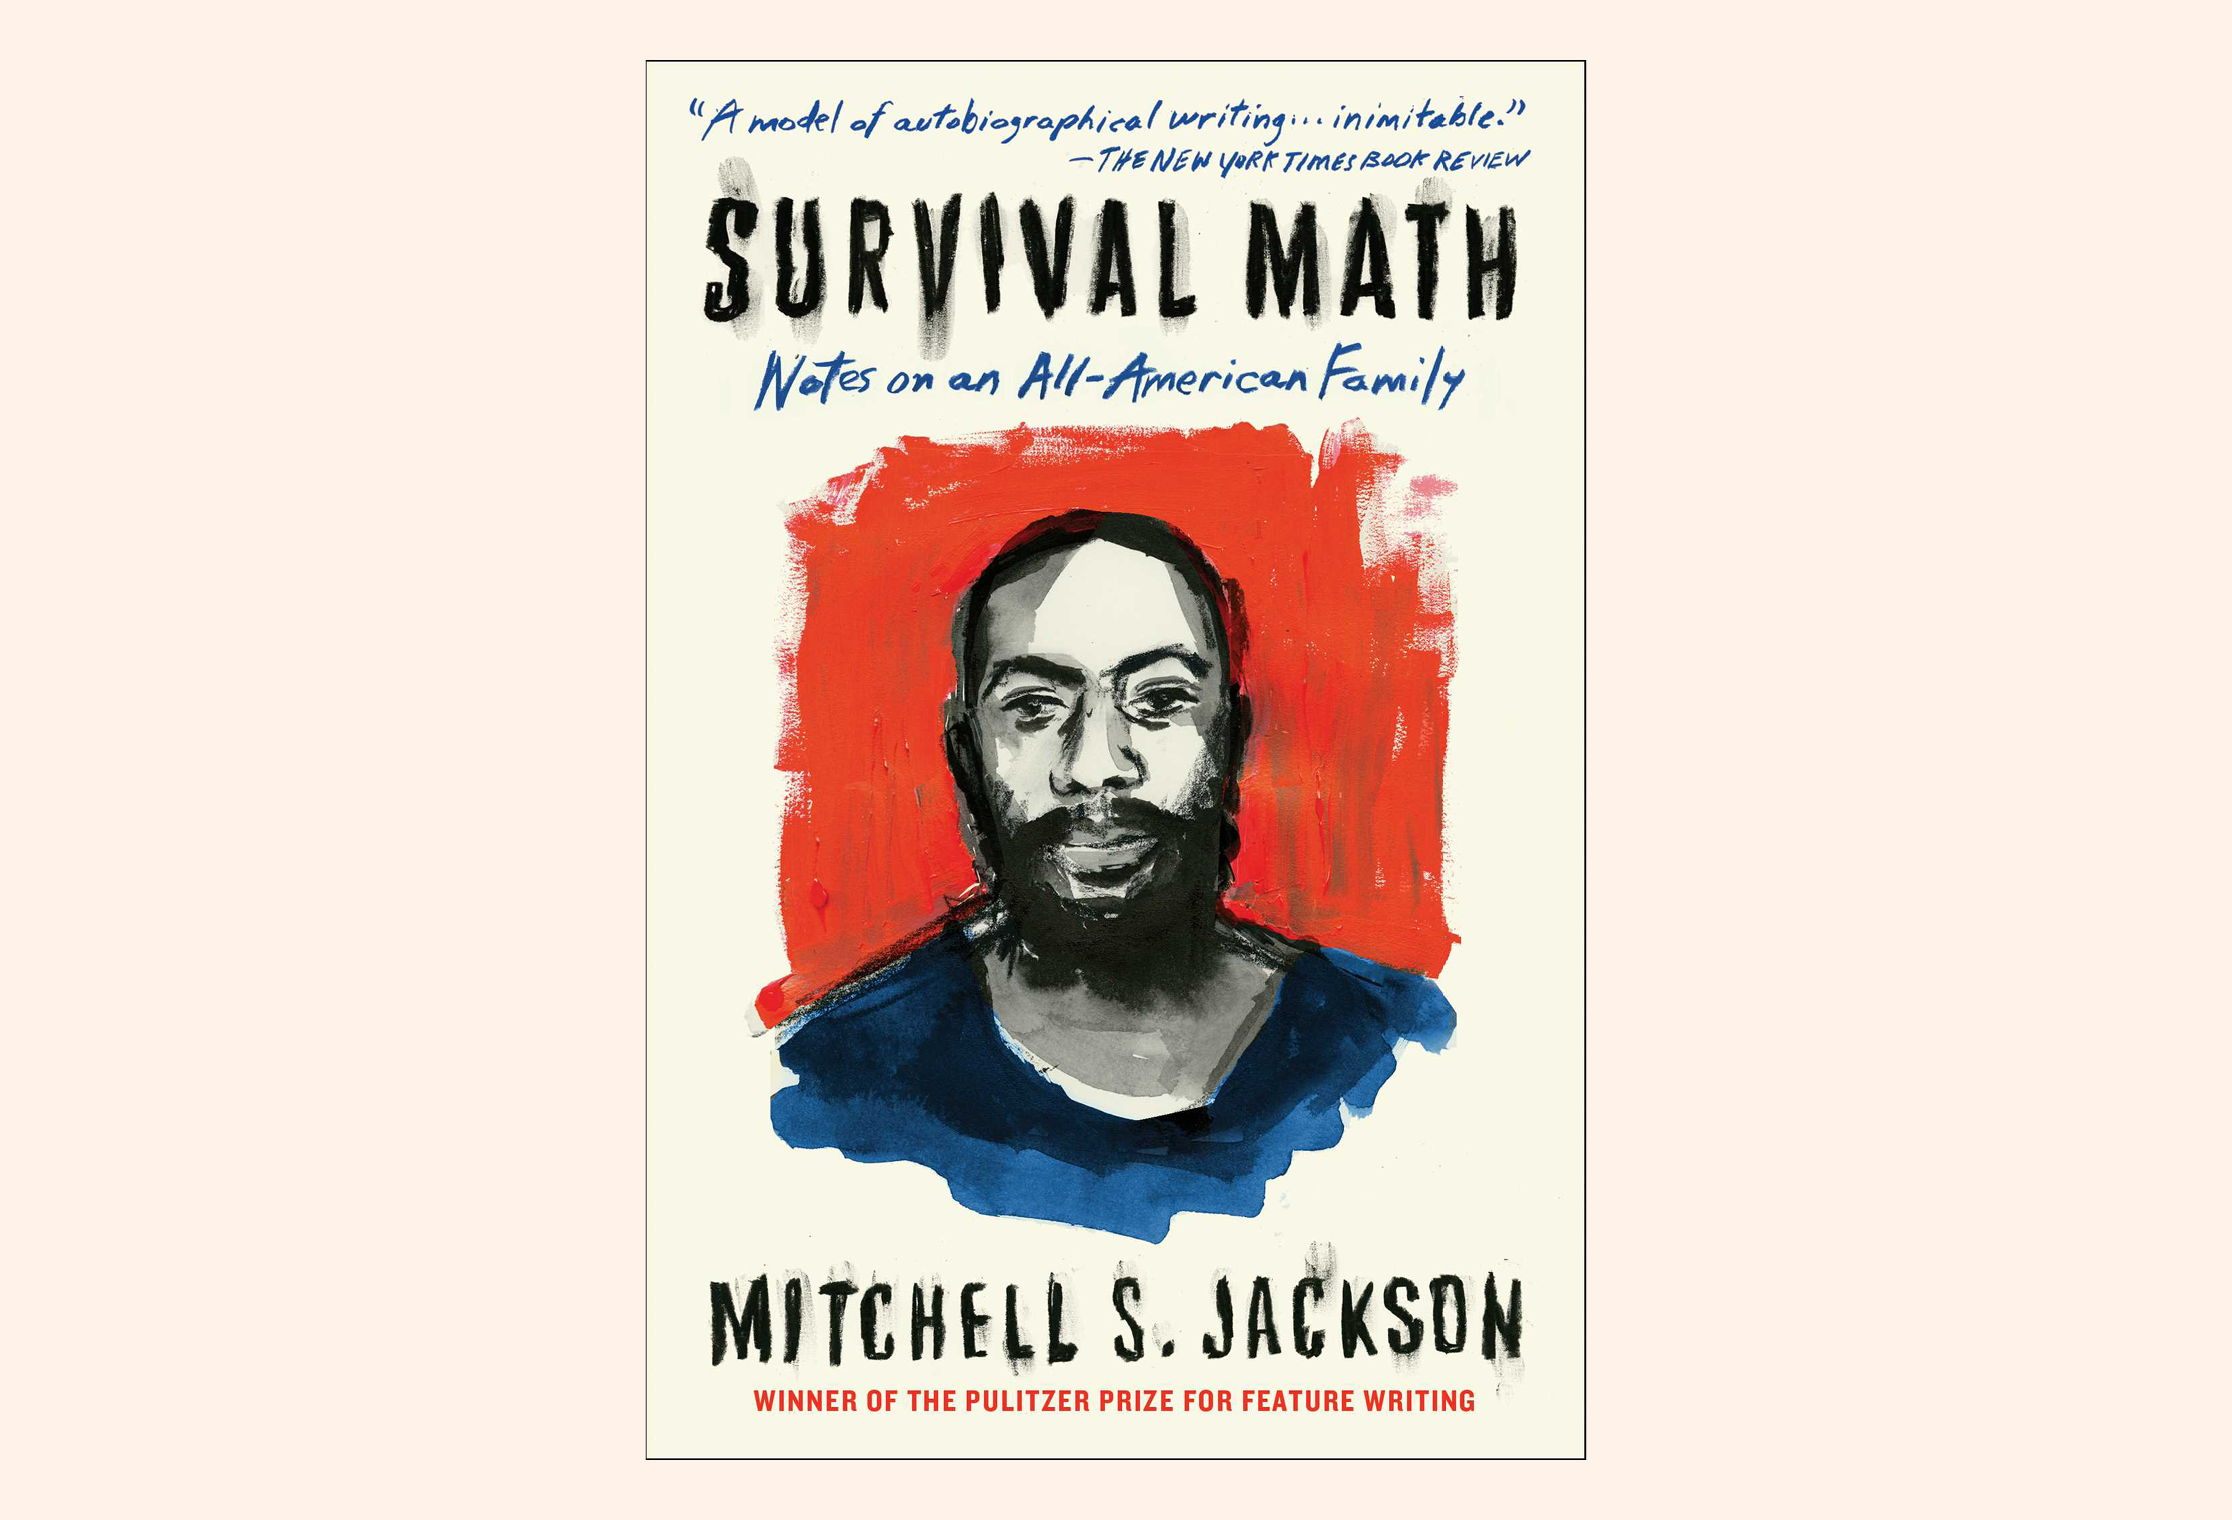 Survival Math, 2020, published by Scribner